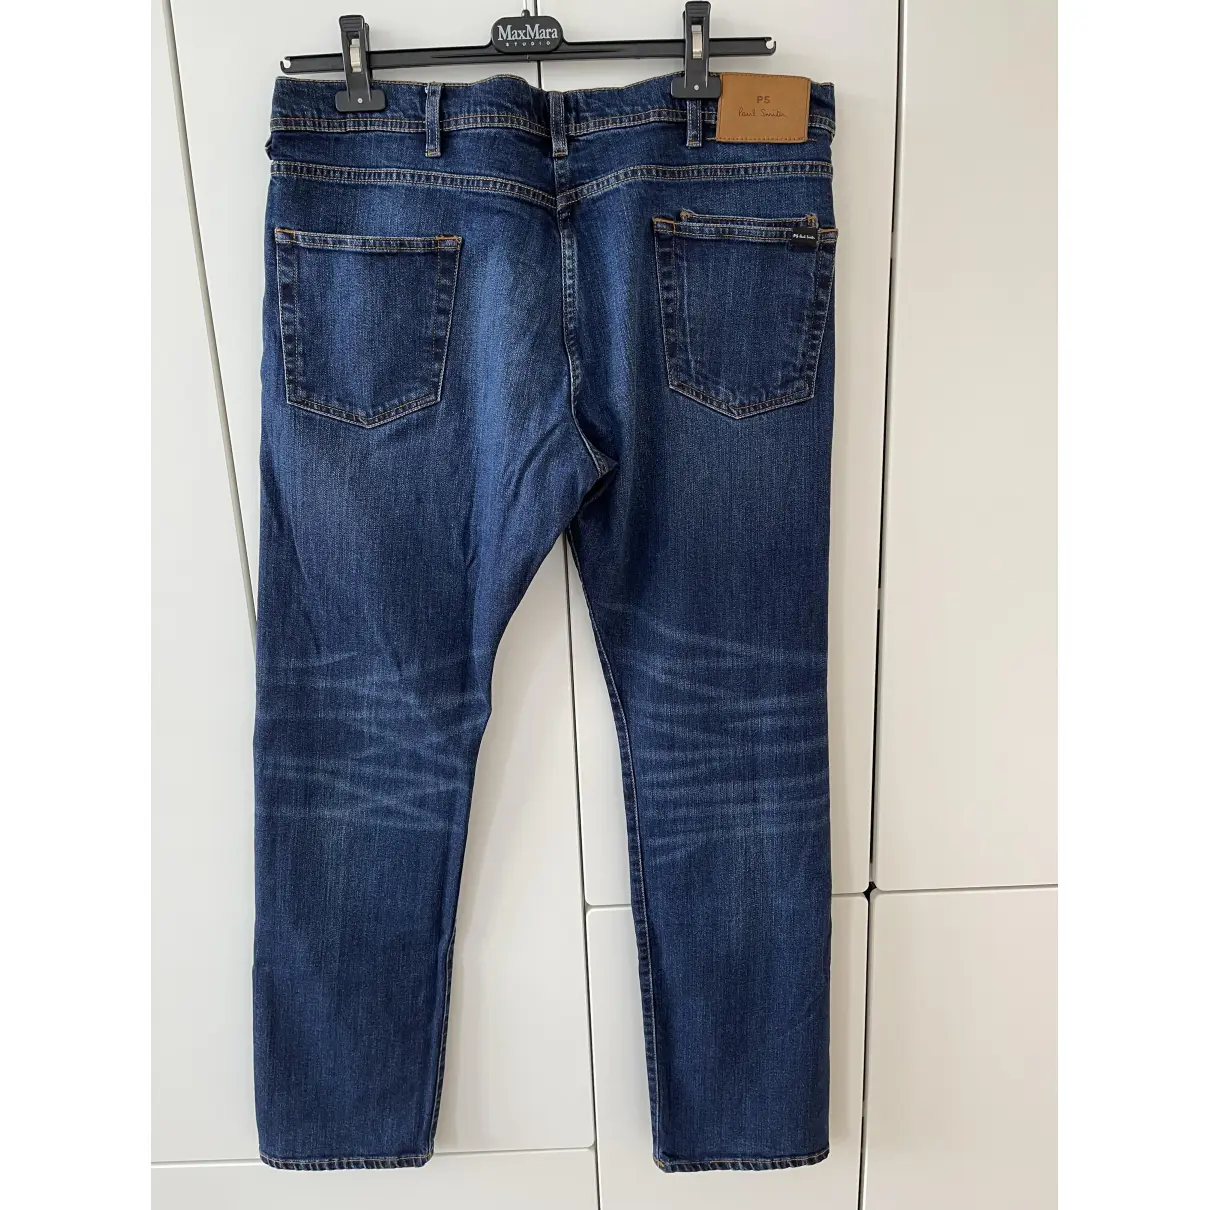 Buy Paul Smith Jeans online